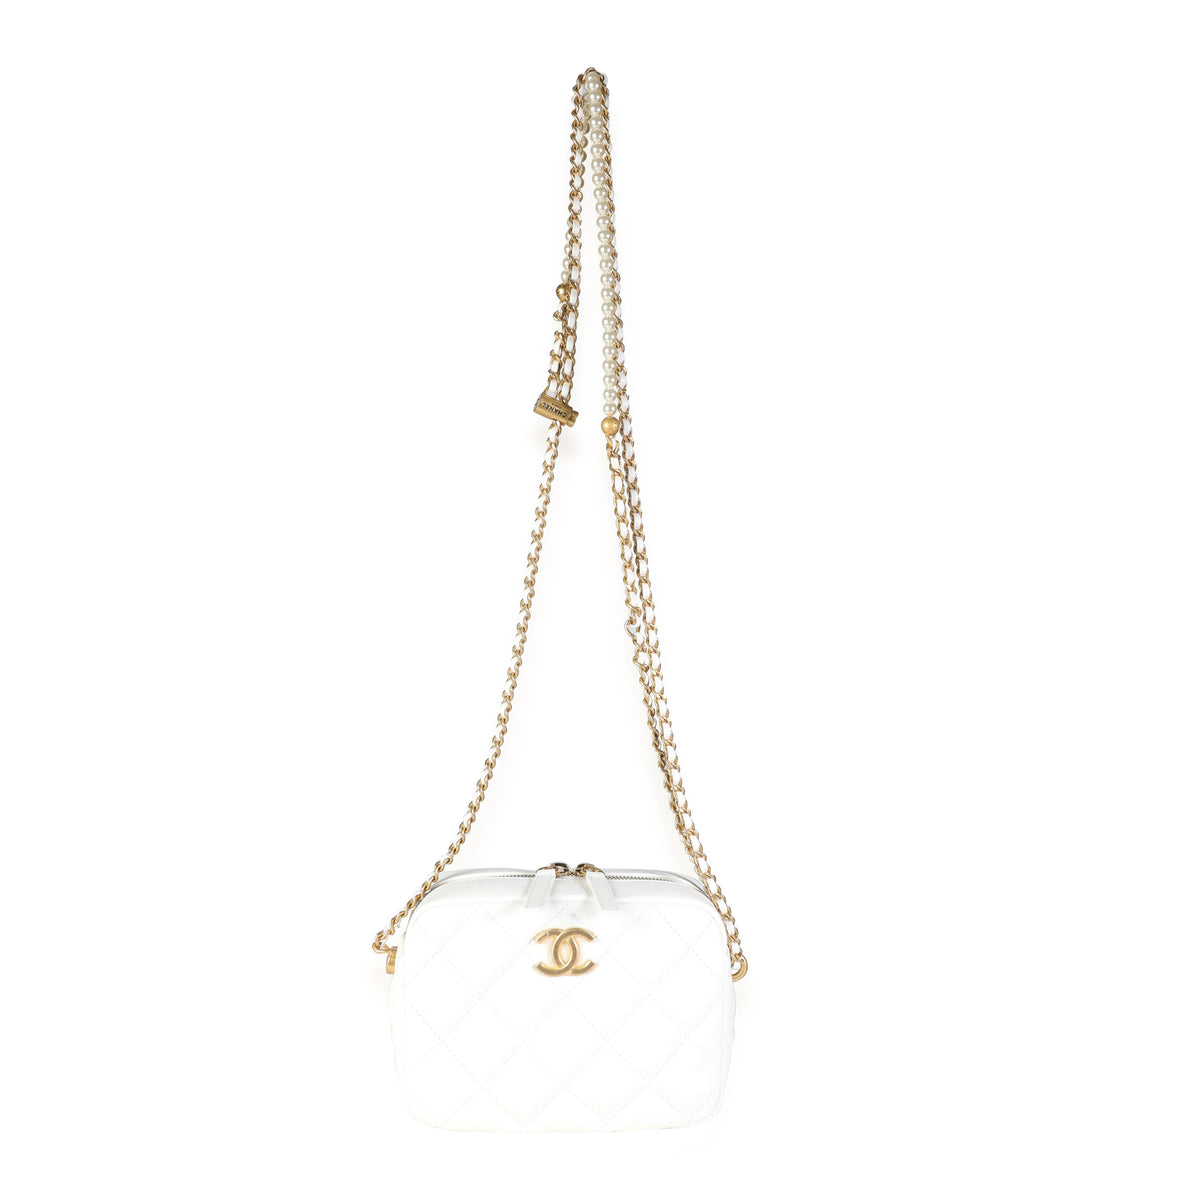 Chanel Metallic Gold Lambskin & Python Boy Bag Medium